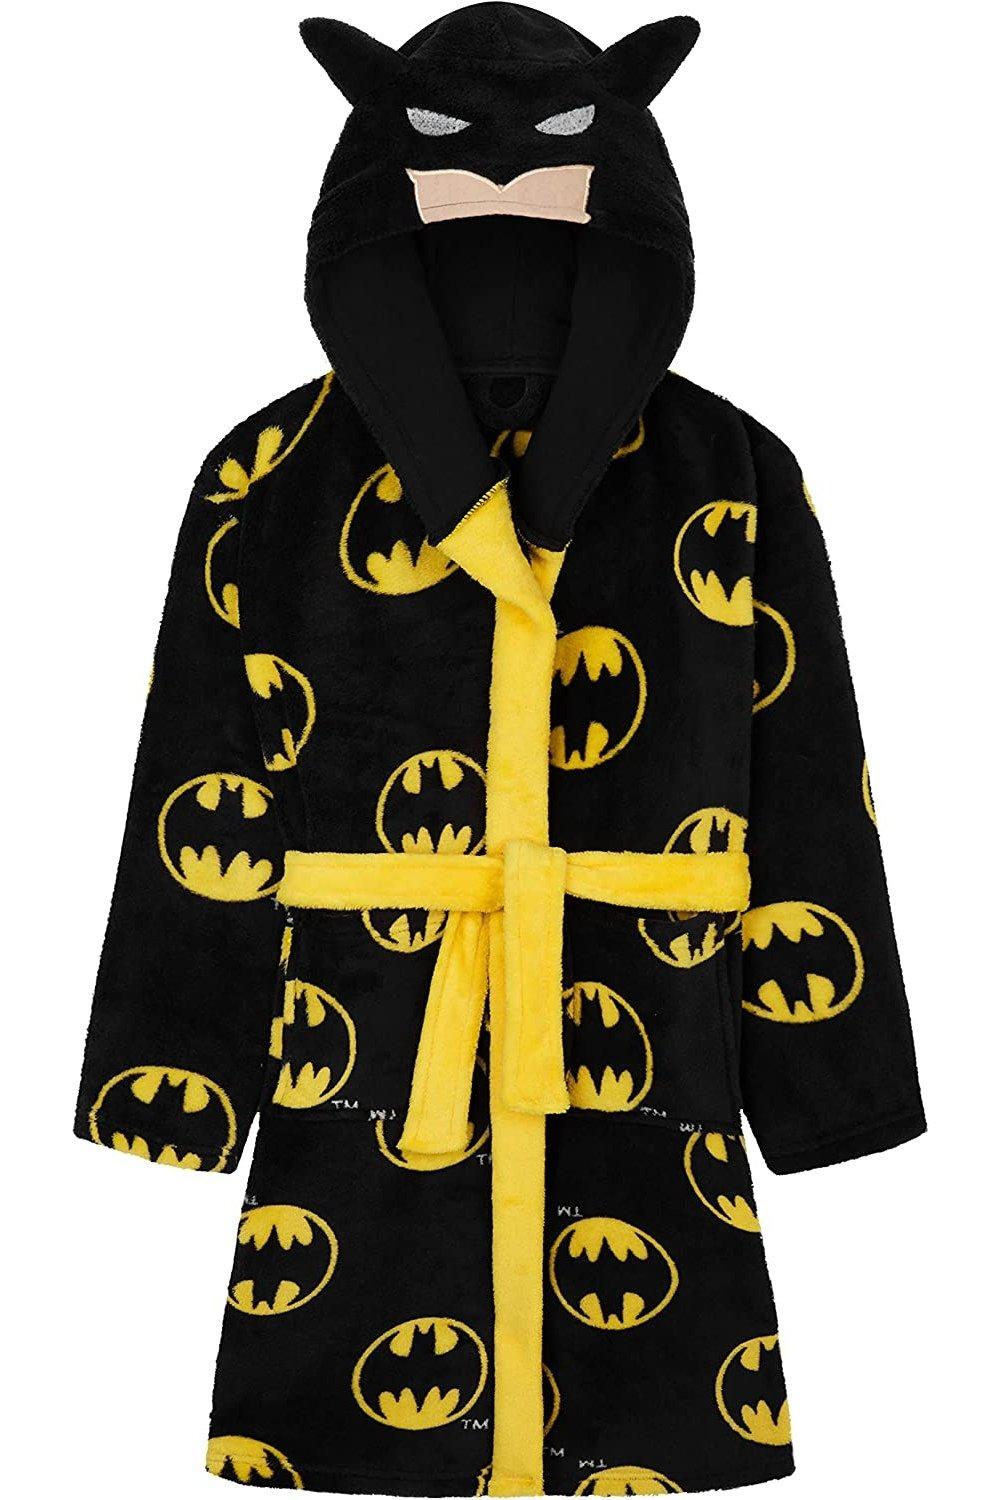 Batman Dressing Gown